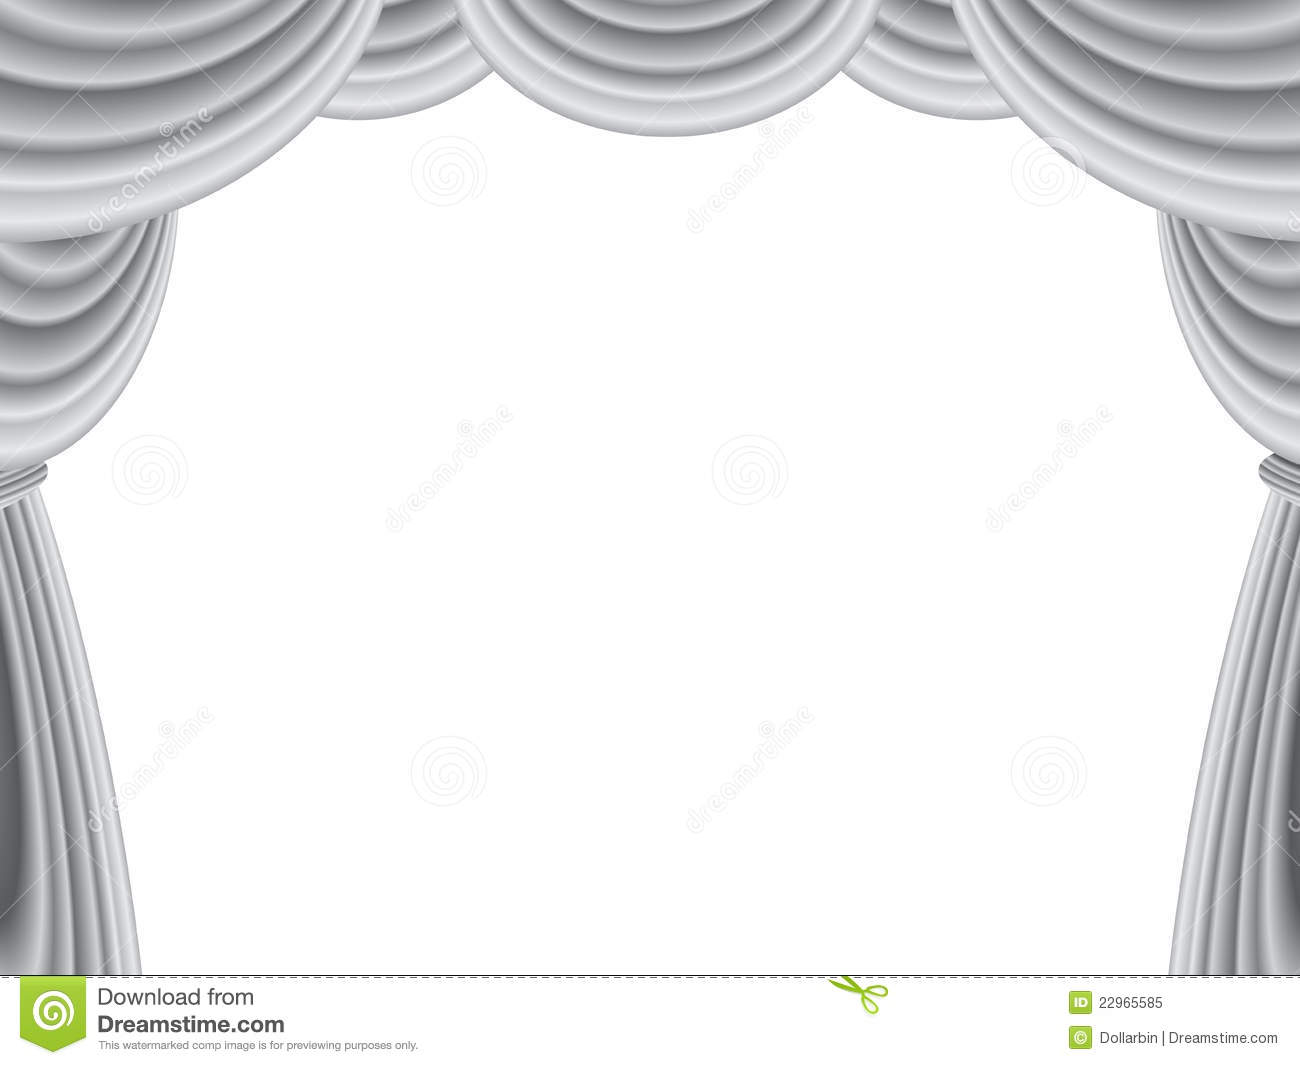 Velvet Stage Curtain Royalty Free Stock Photo   Image  22965585